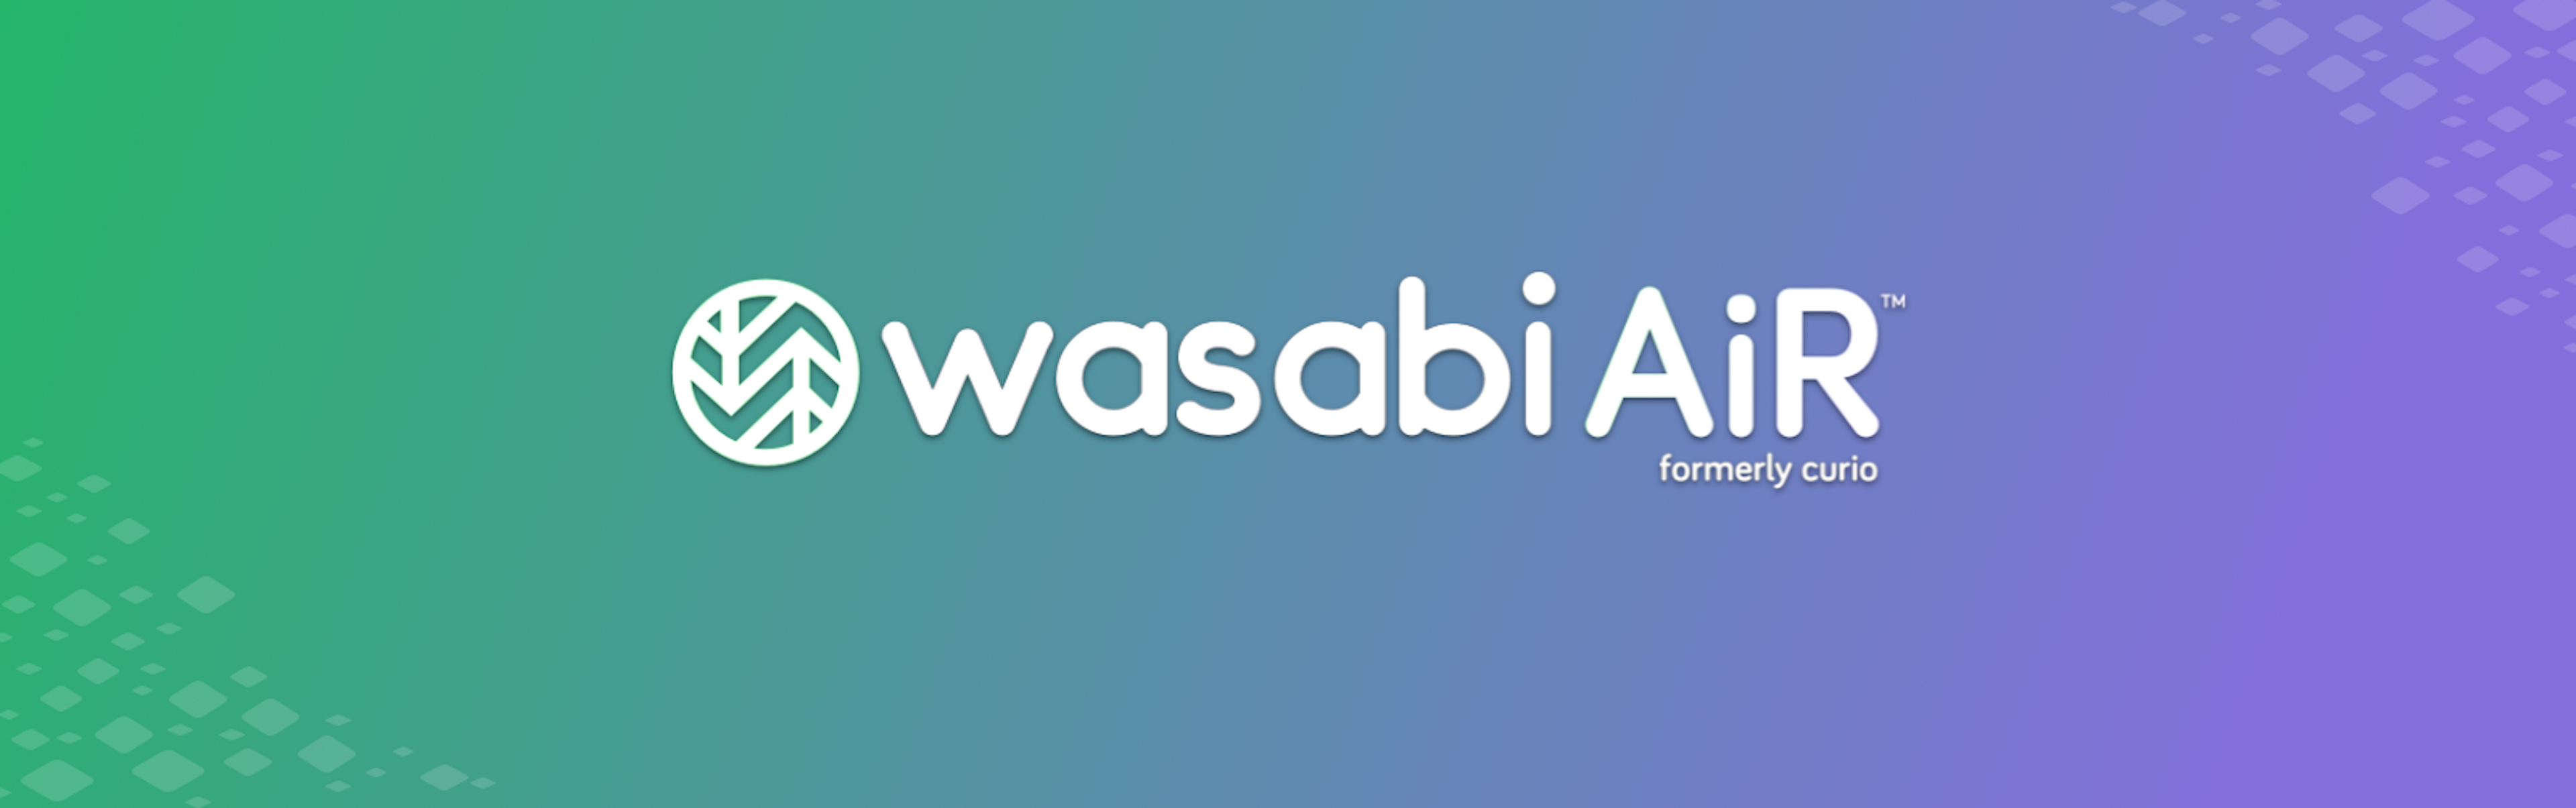 Wasabi AiR logo